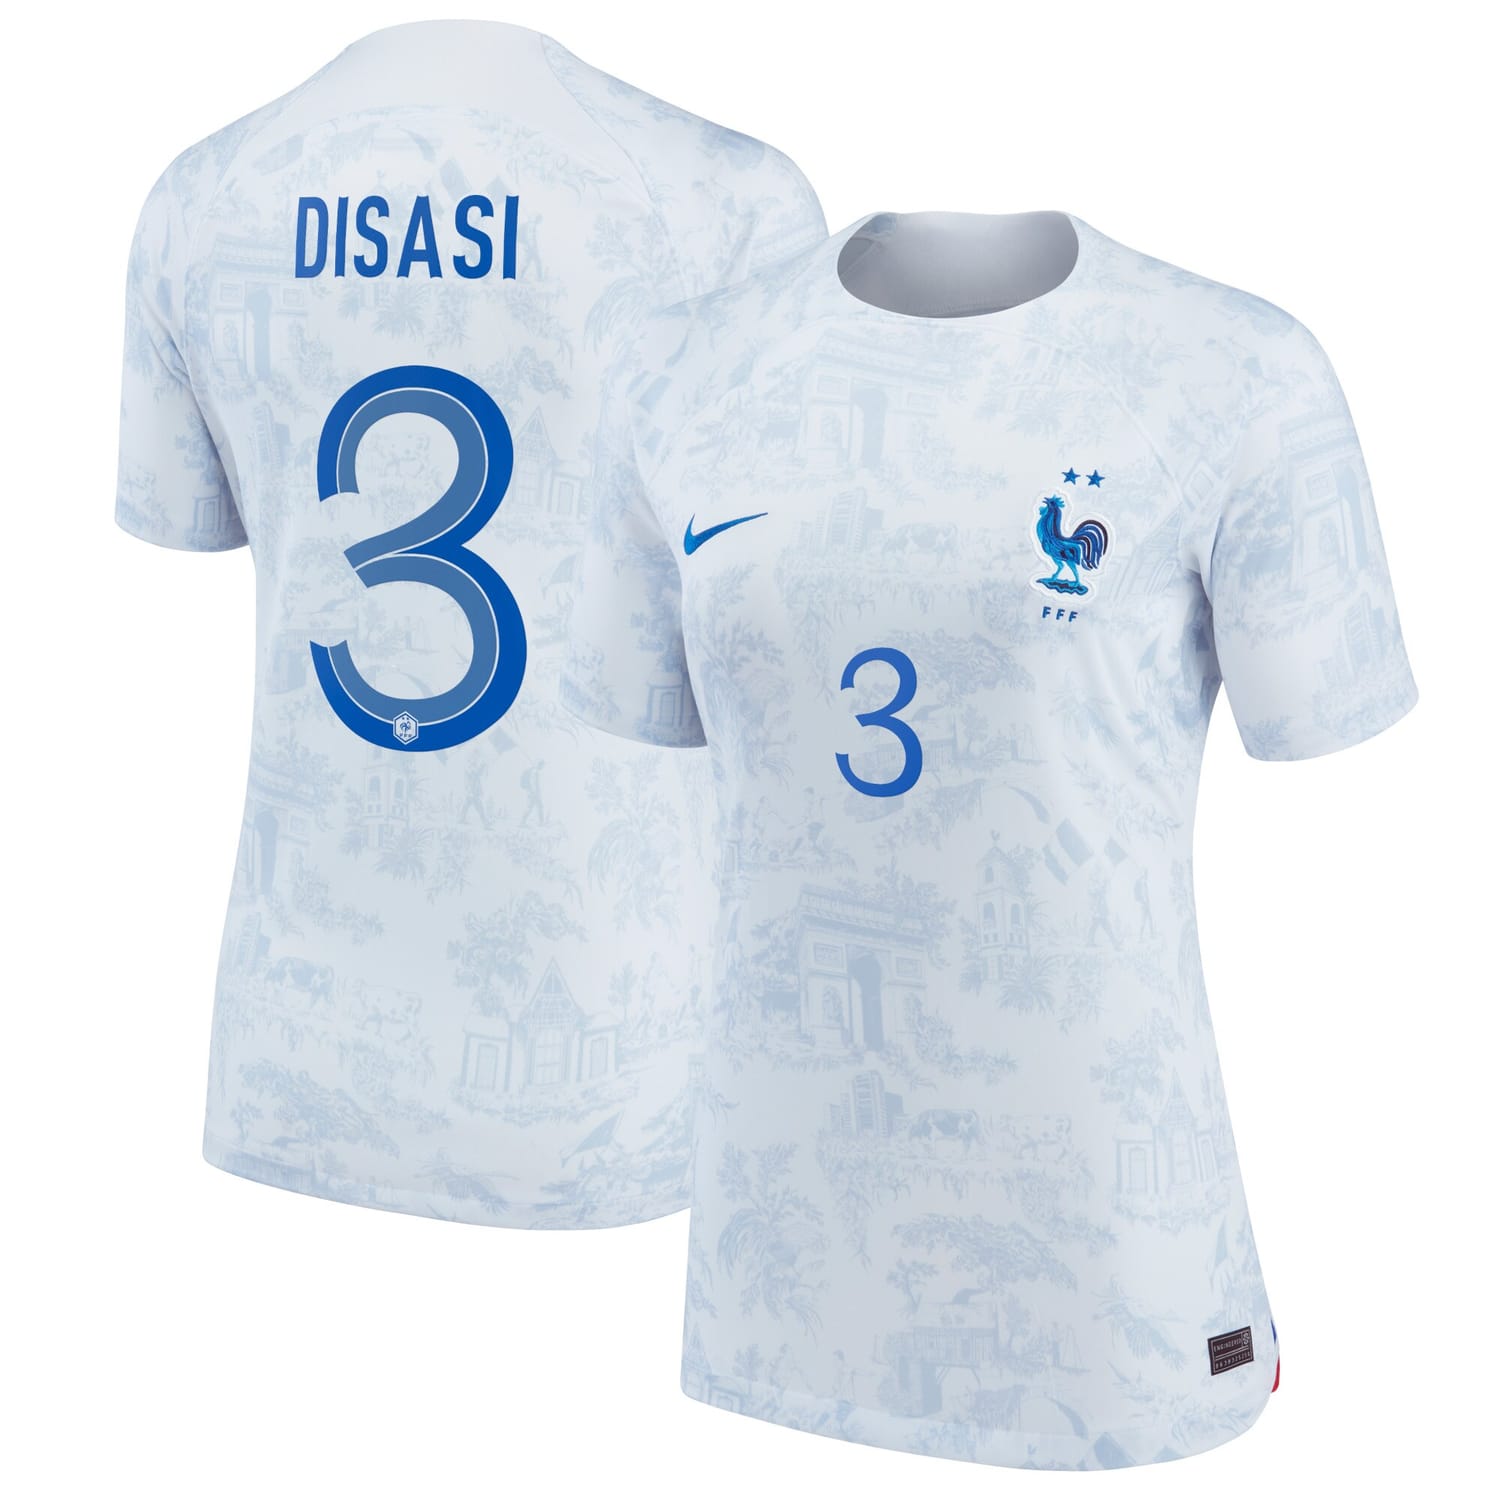 France National Team Away Jersey Shirt 2022 player Axel Disasi printing for Women